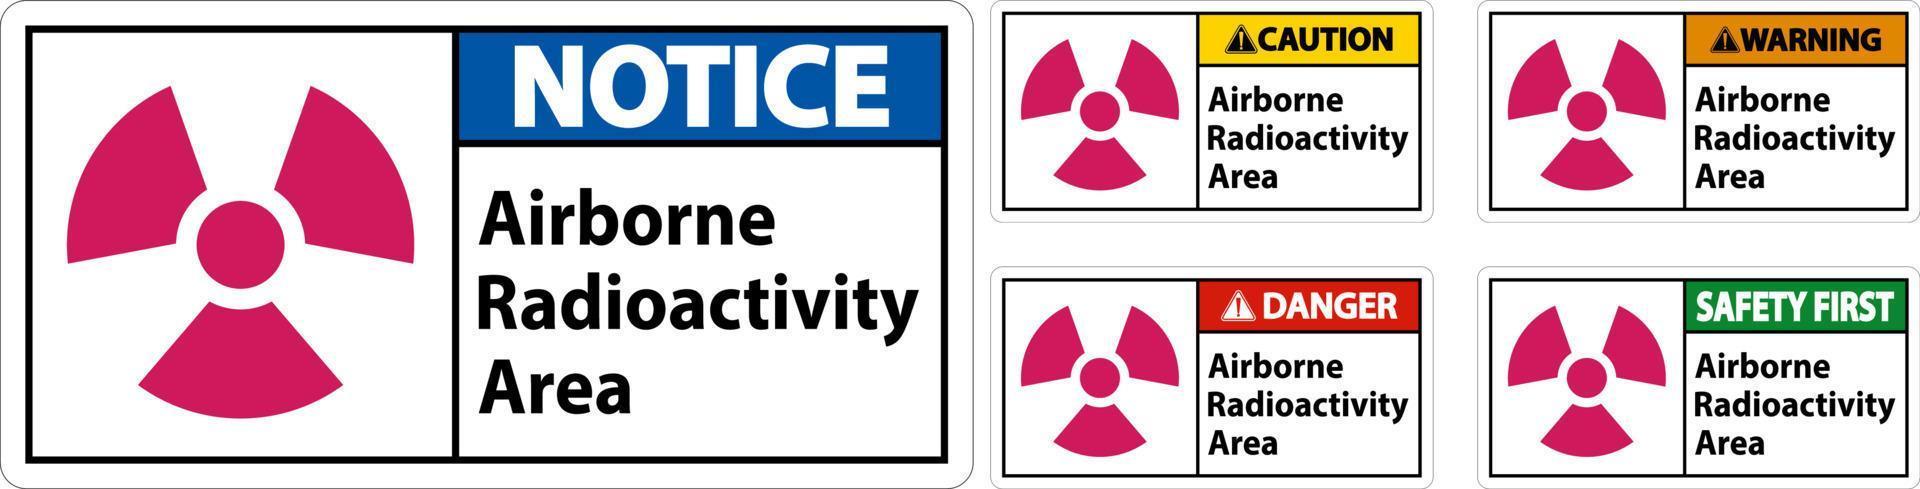 Airborne Radioactivity Area Symbol Sign On White Background vector